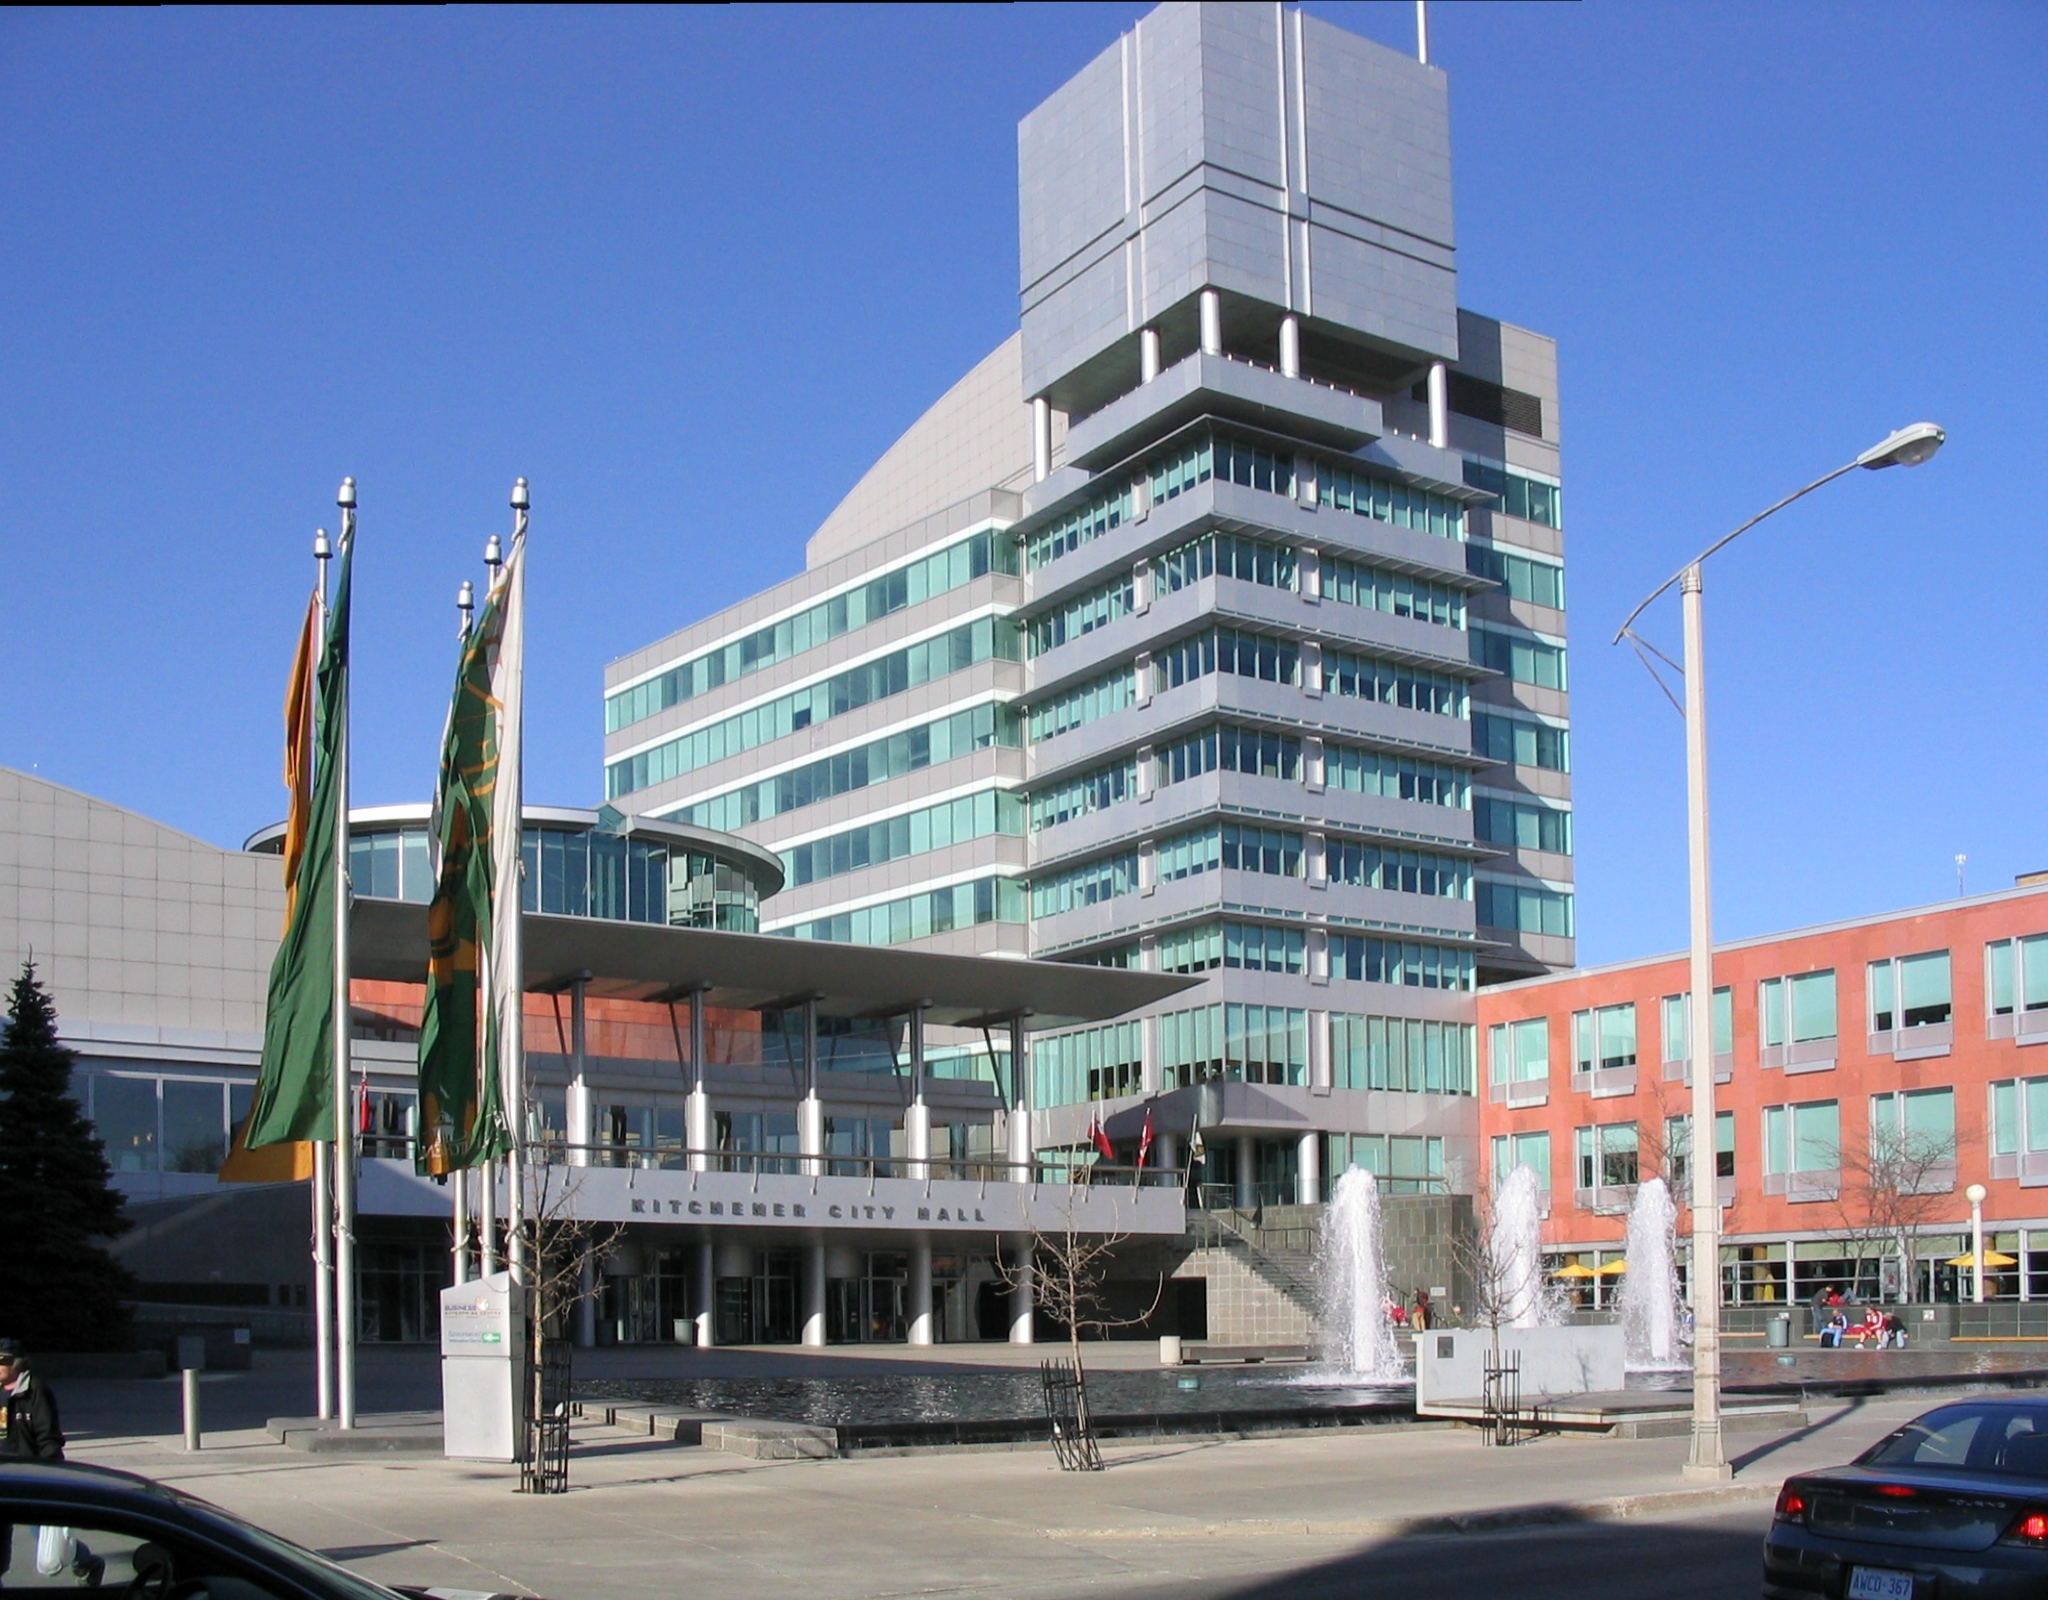 View of Kitchener City Hall